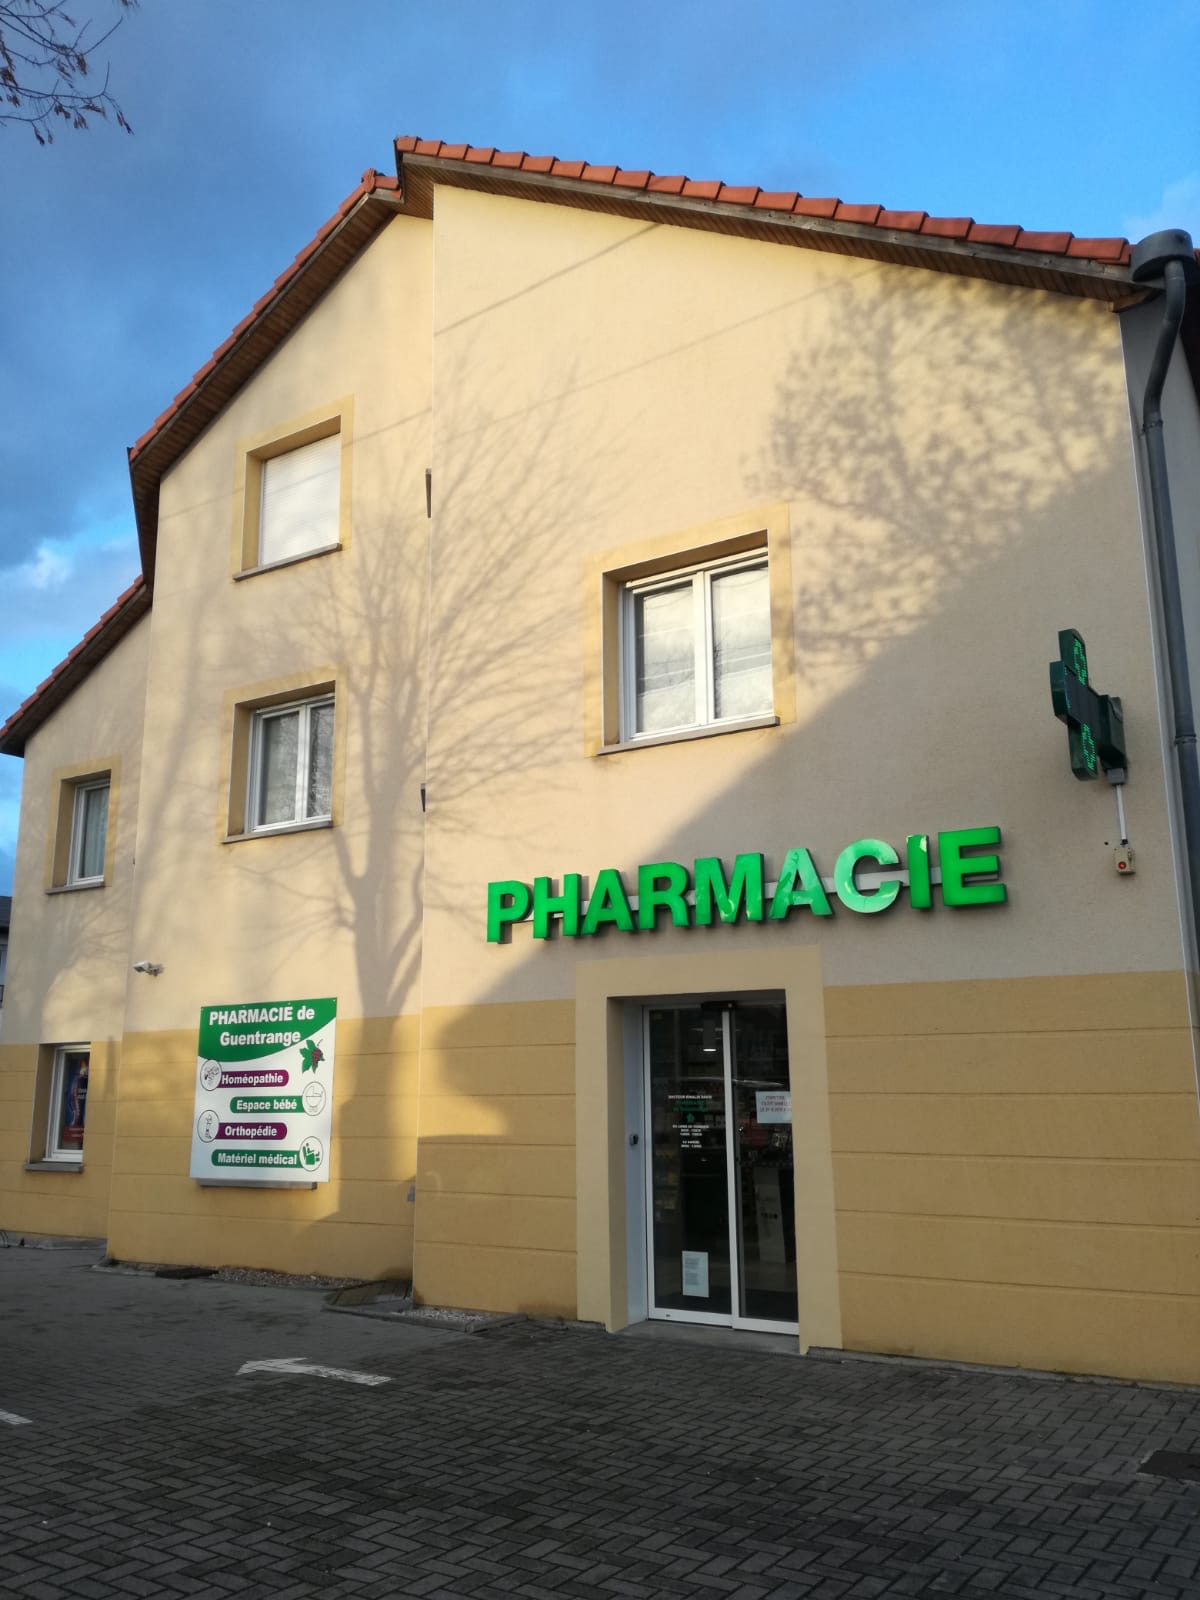 Pharmacie de Guentrange